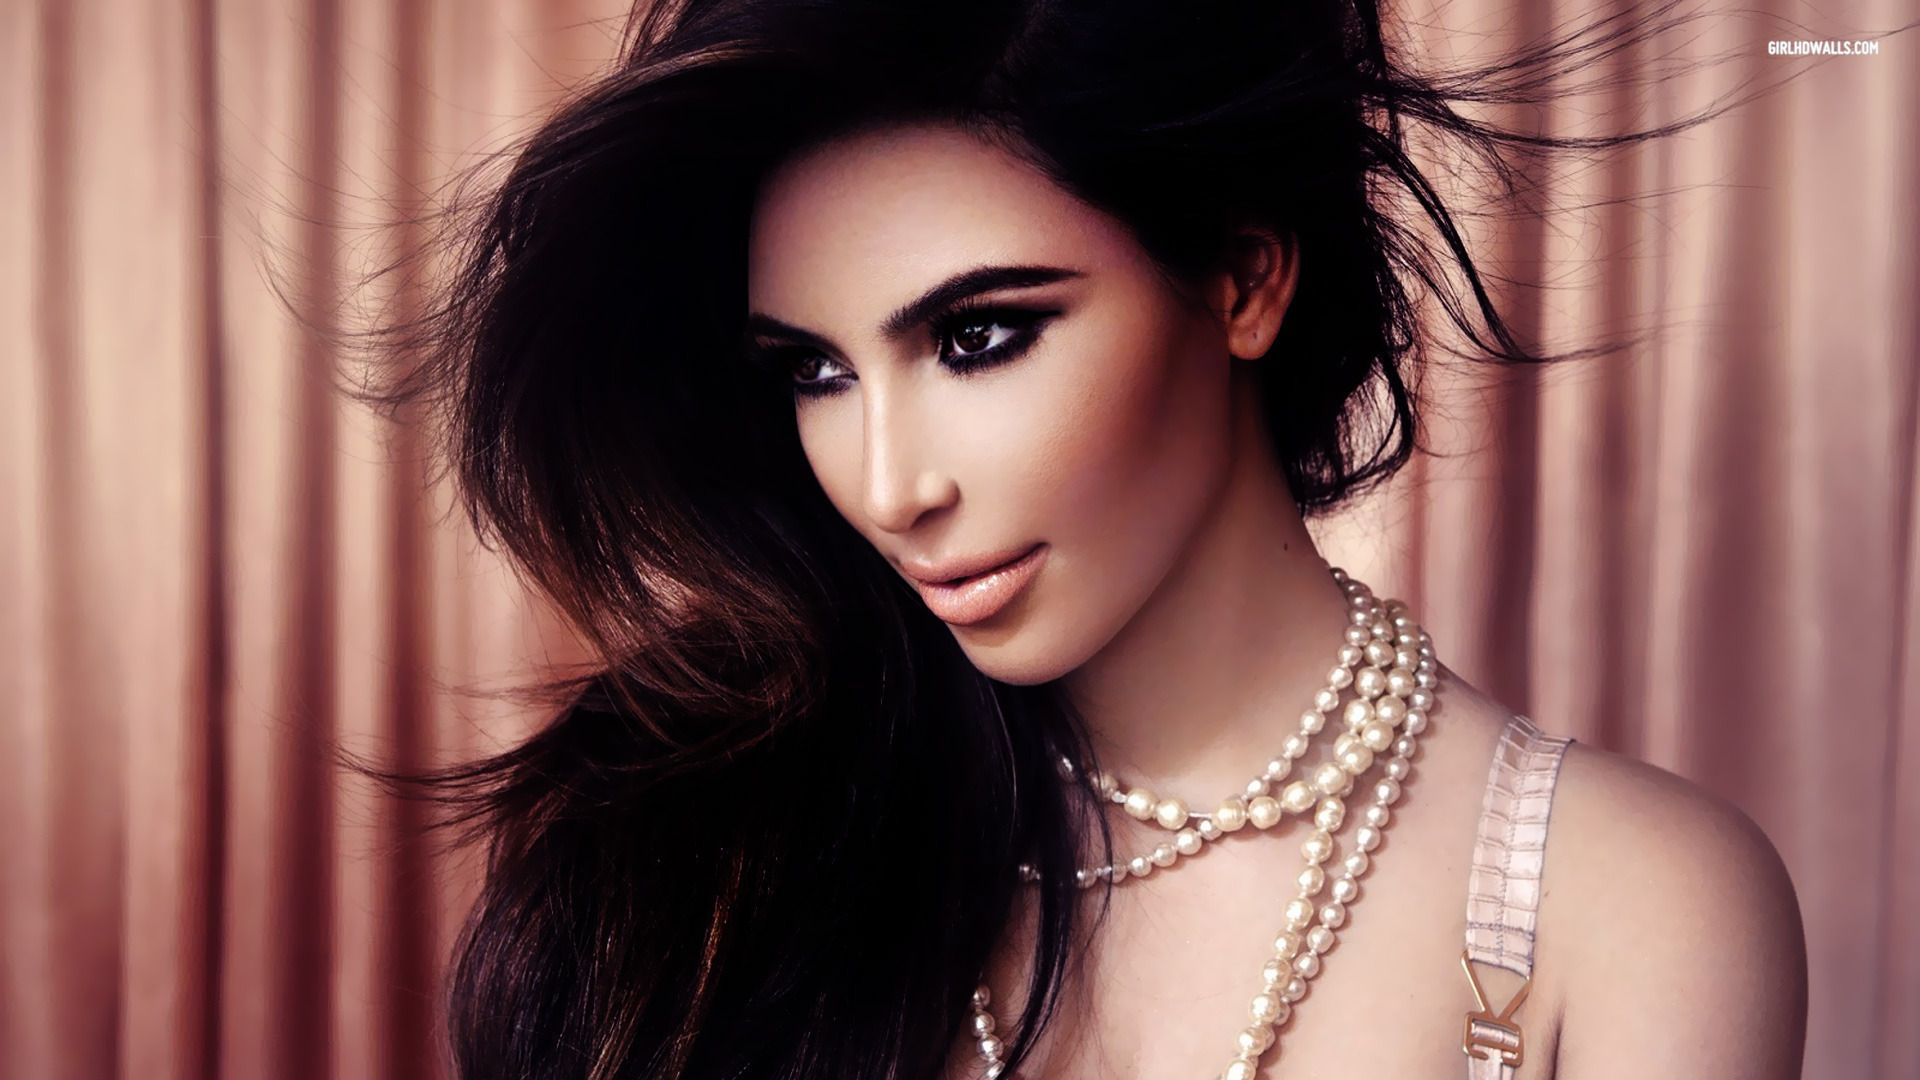 Kim Kardashian Background 4k